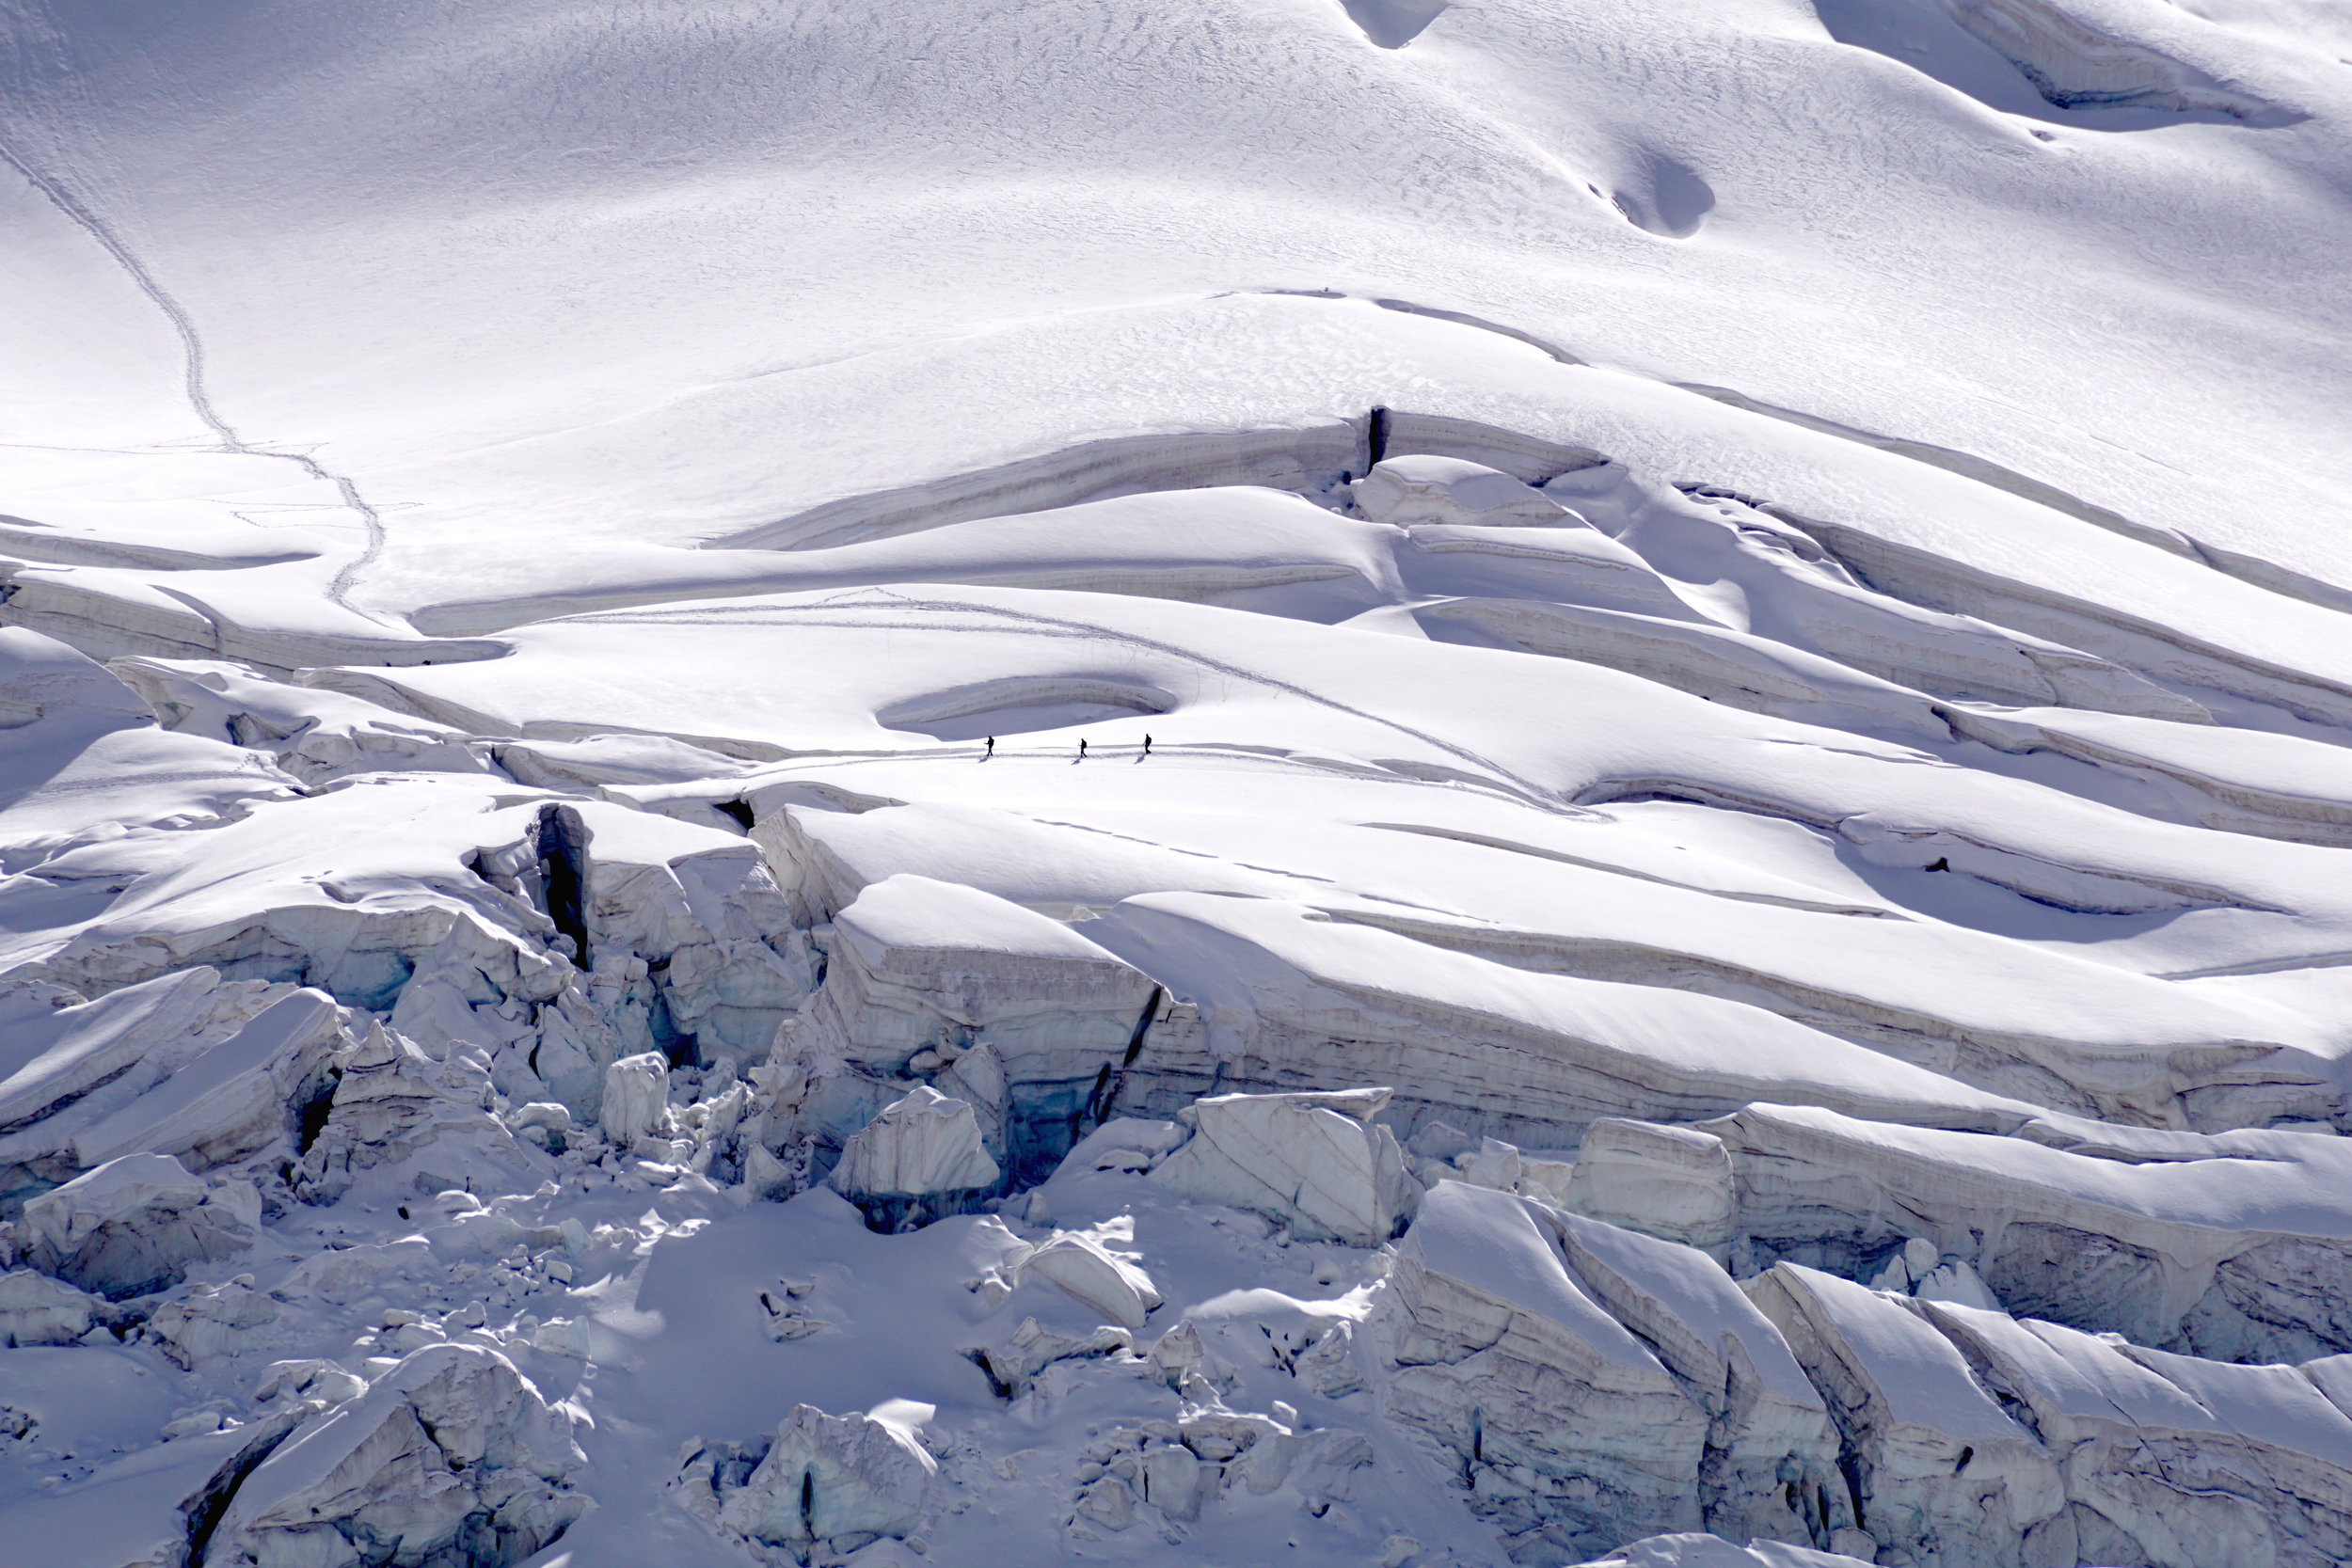 Canva - Aerial Photography of Alps crevase alpine adventure travel winter ski snowboard by Pixabay.jpg